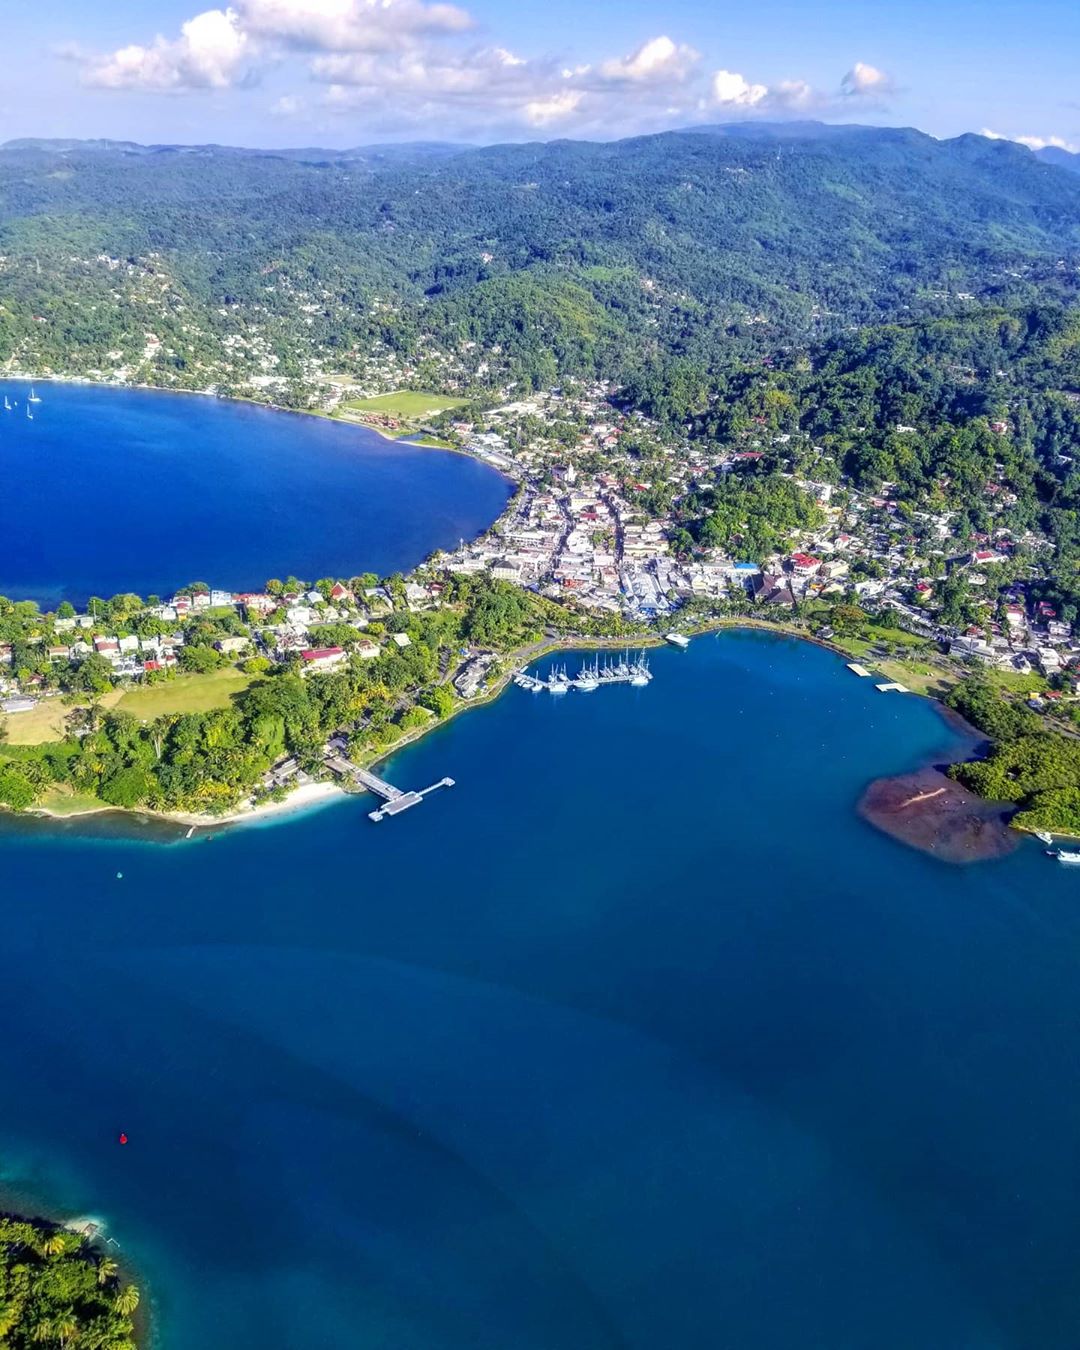 13 Stunning Aerial Views of Jamaica